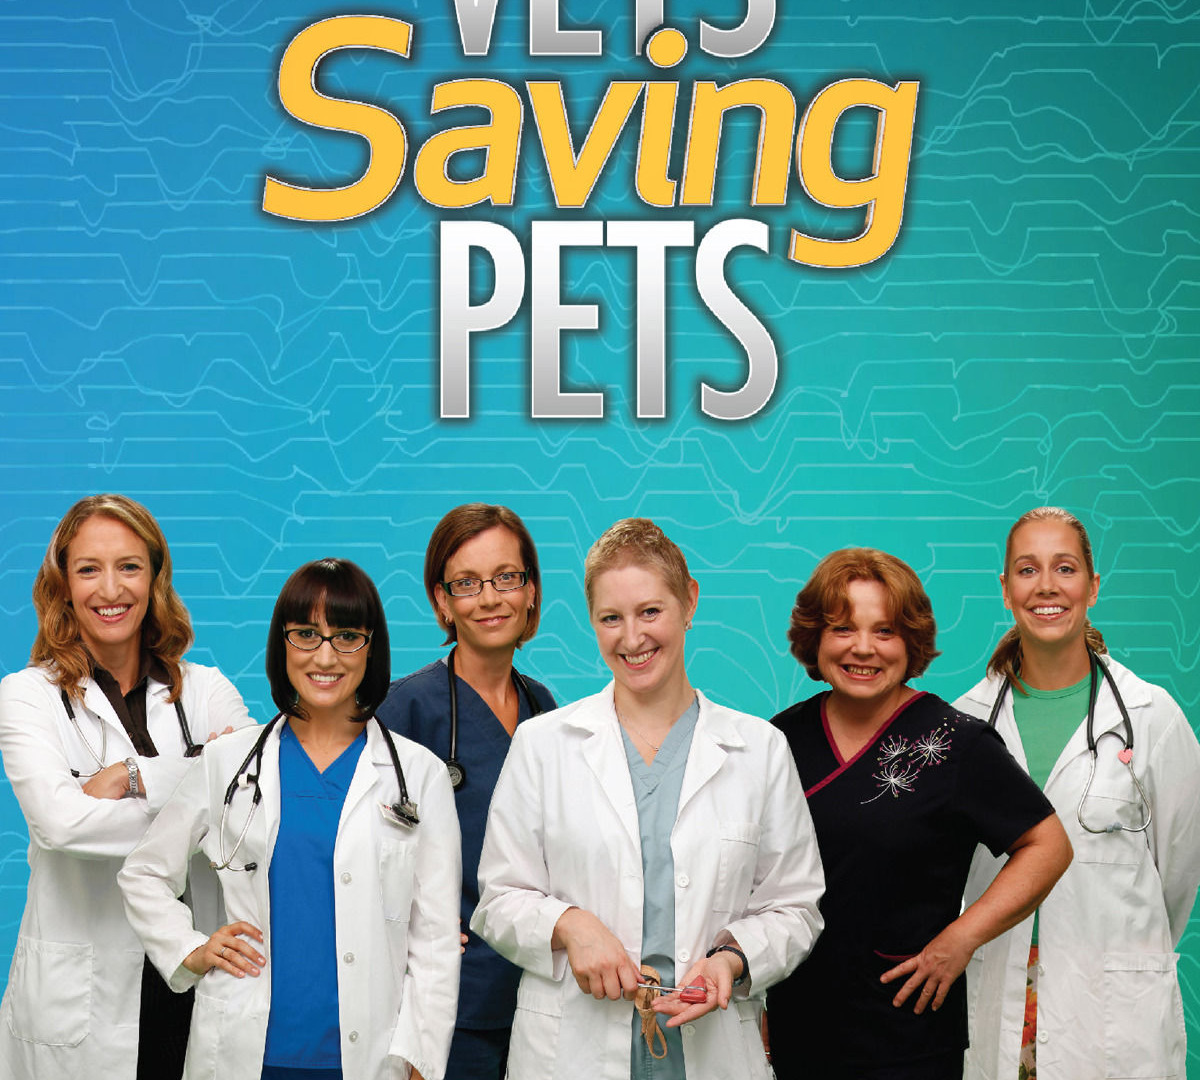 Show Vets Saving Pets